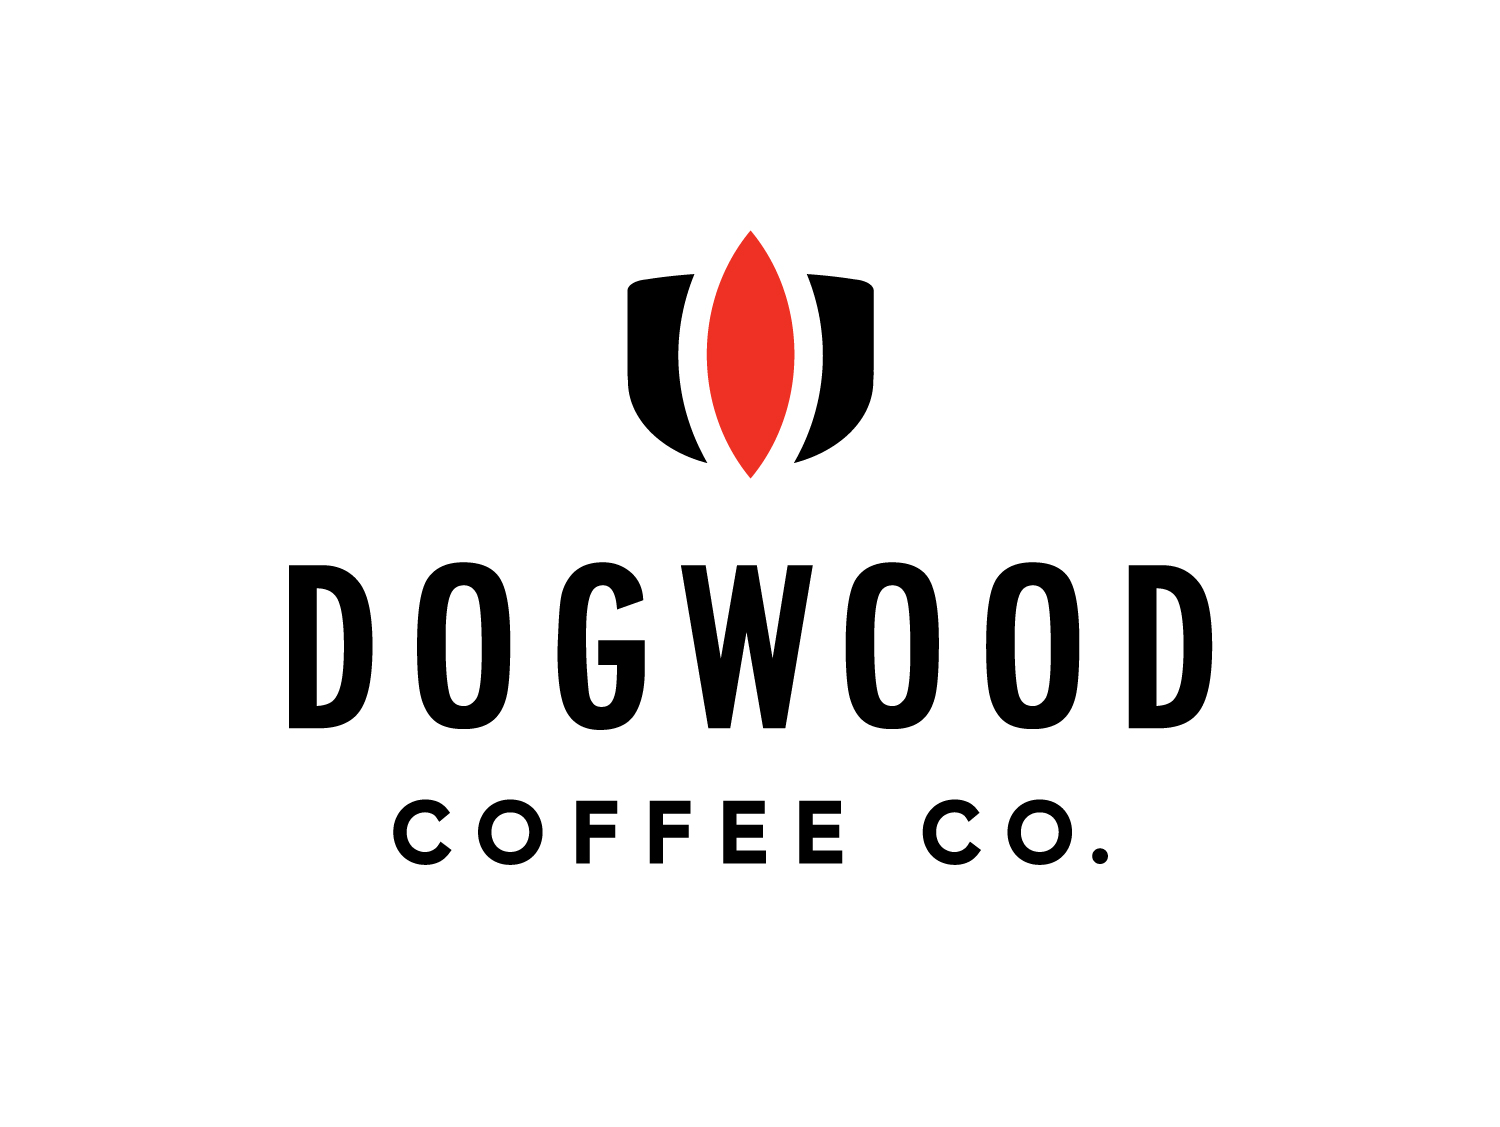 Dogwood-Coffee-Co-logo-01.jpg